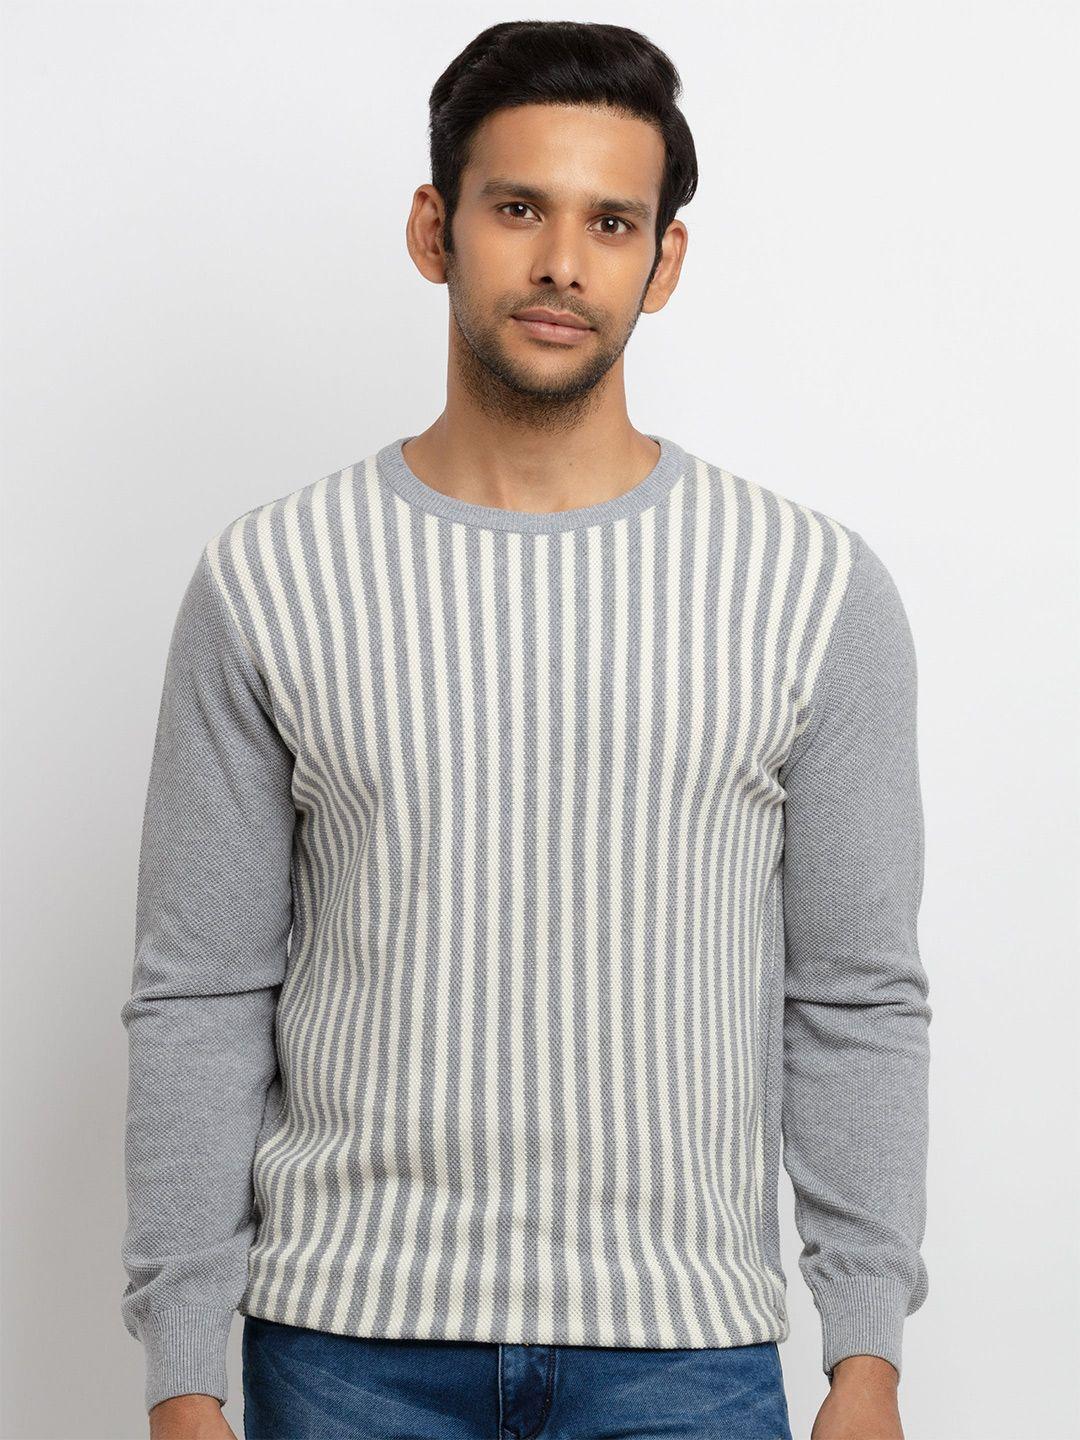 status quo men grey & off white striped round neck sweater